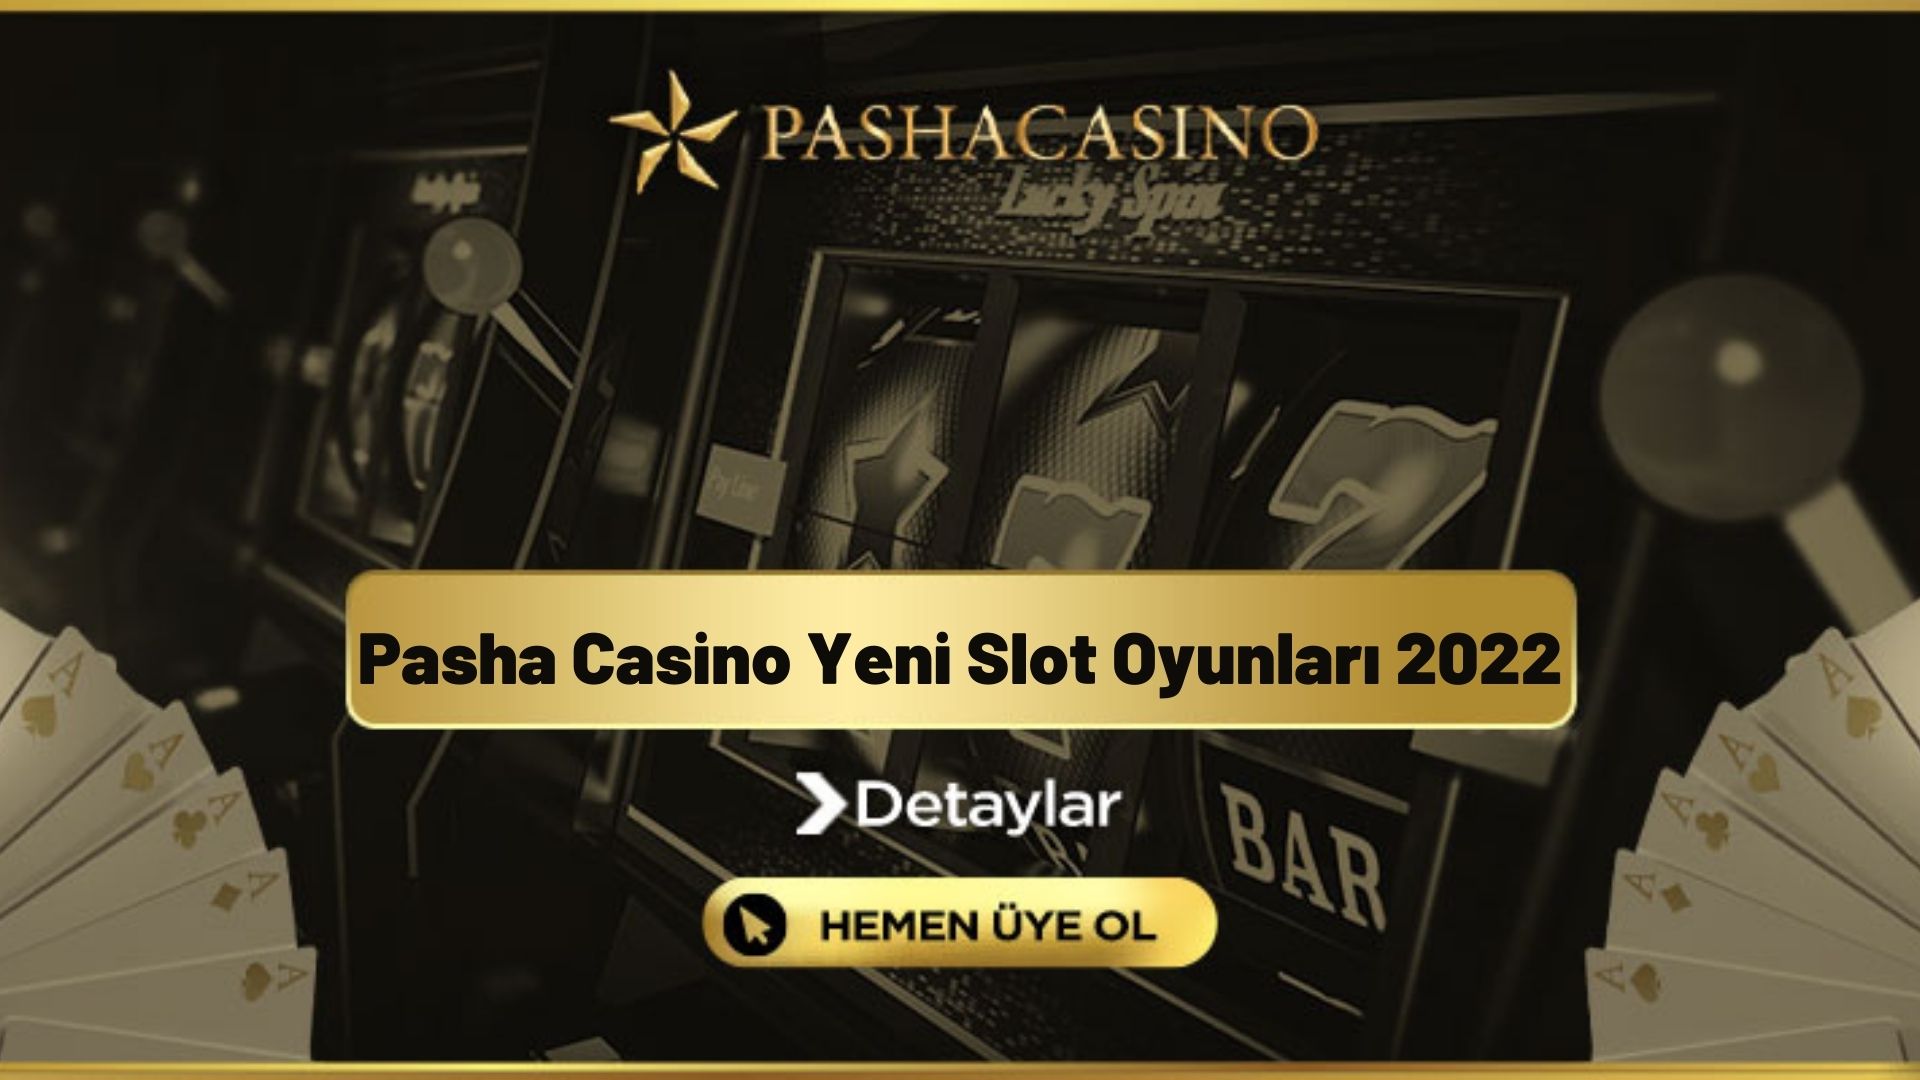 Pasha Casino Yeni Slot Oyunları 2022